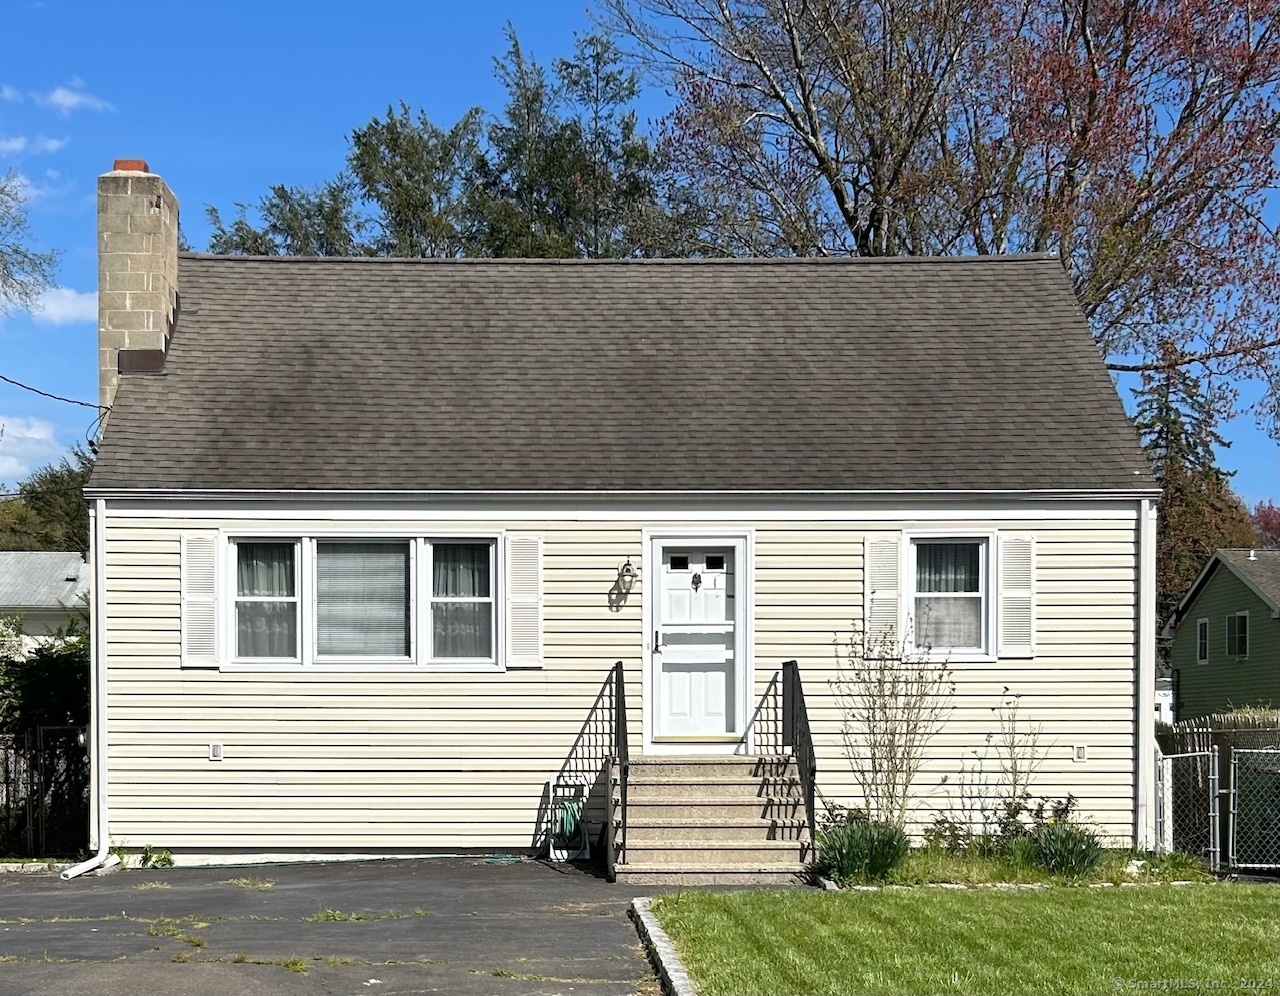 Property for Sale at 7 Hale Street, Westport, Connecticut - Bedrooms: 3 
Bathrooms: 2 
Rooms: 6  - $675,000